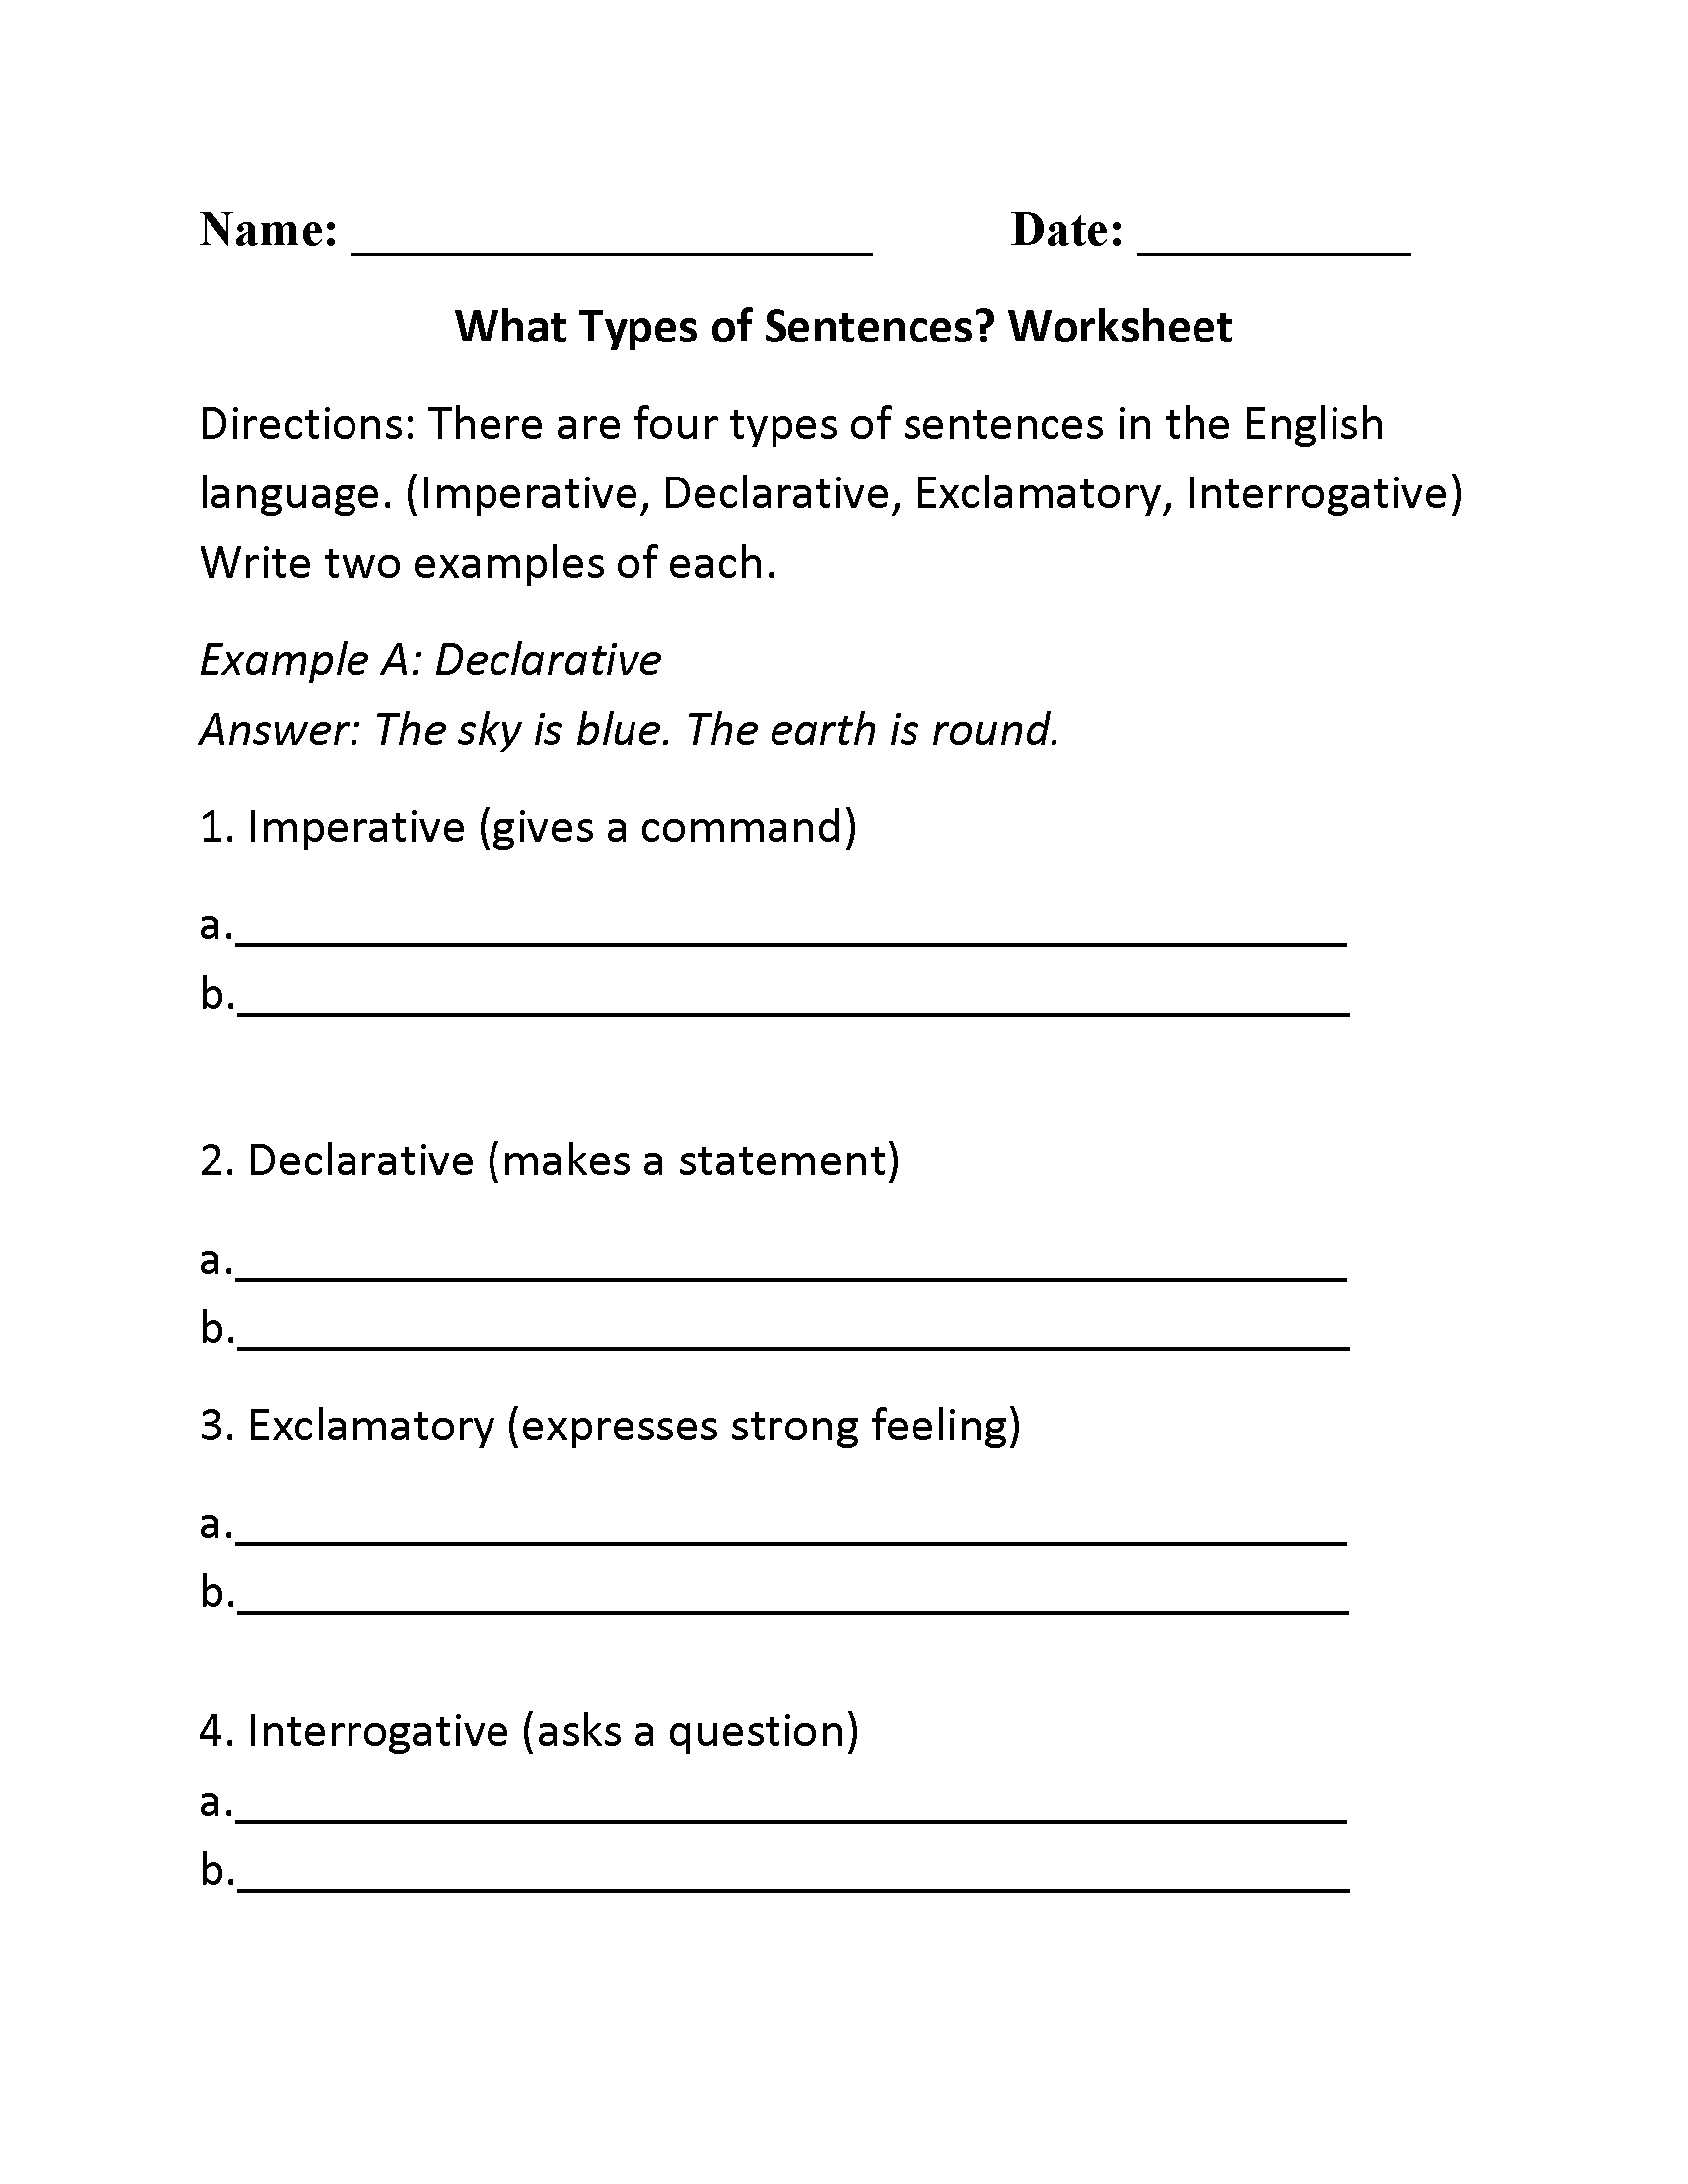 Types of Sentences Worksheets | What Types of Sentences? Worksheet